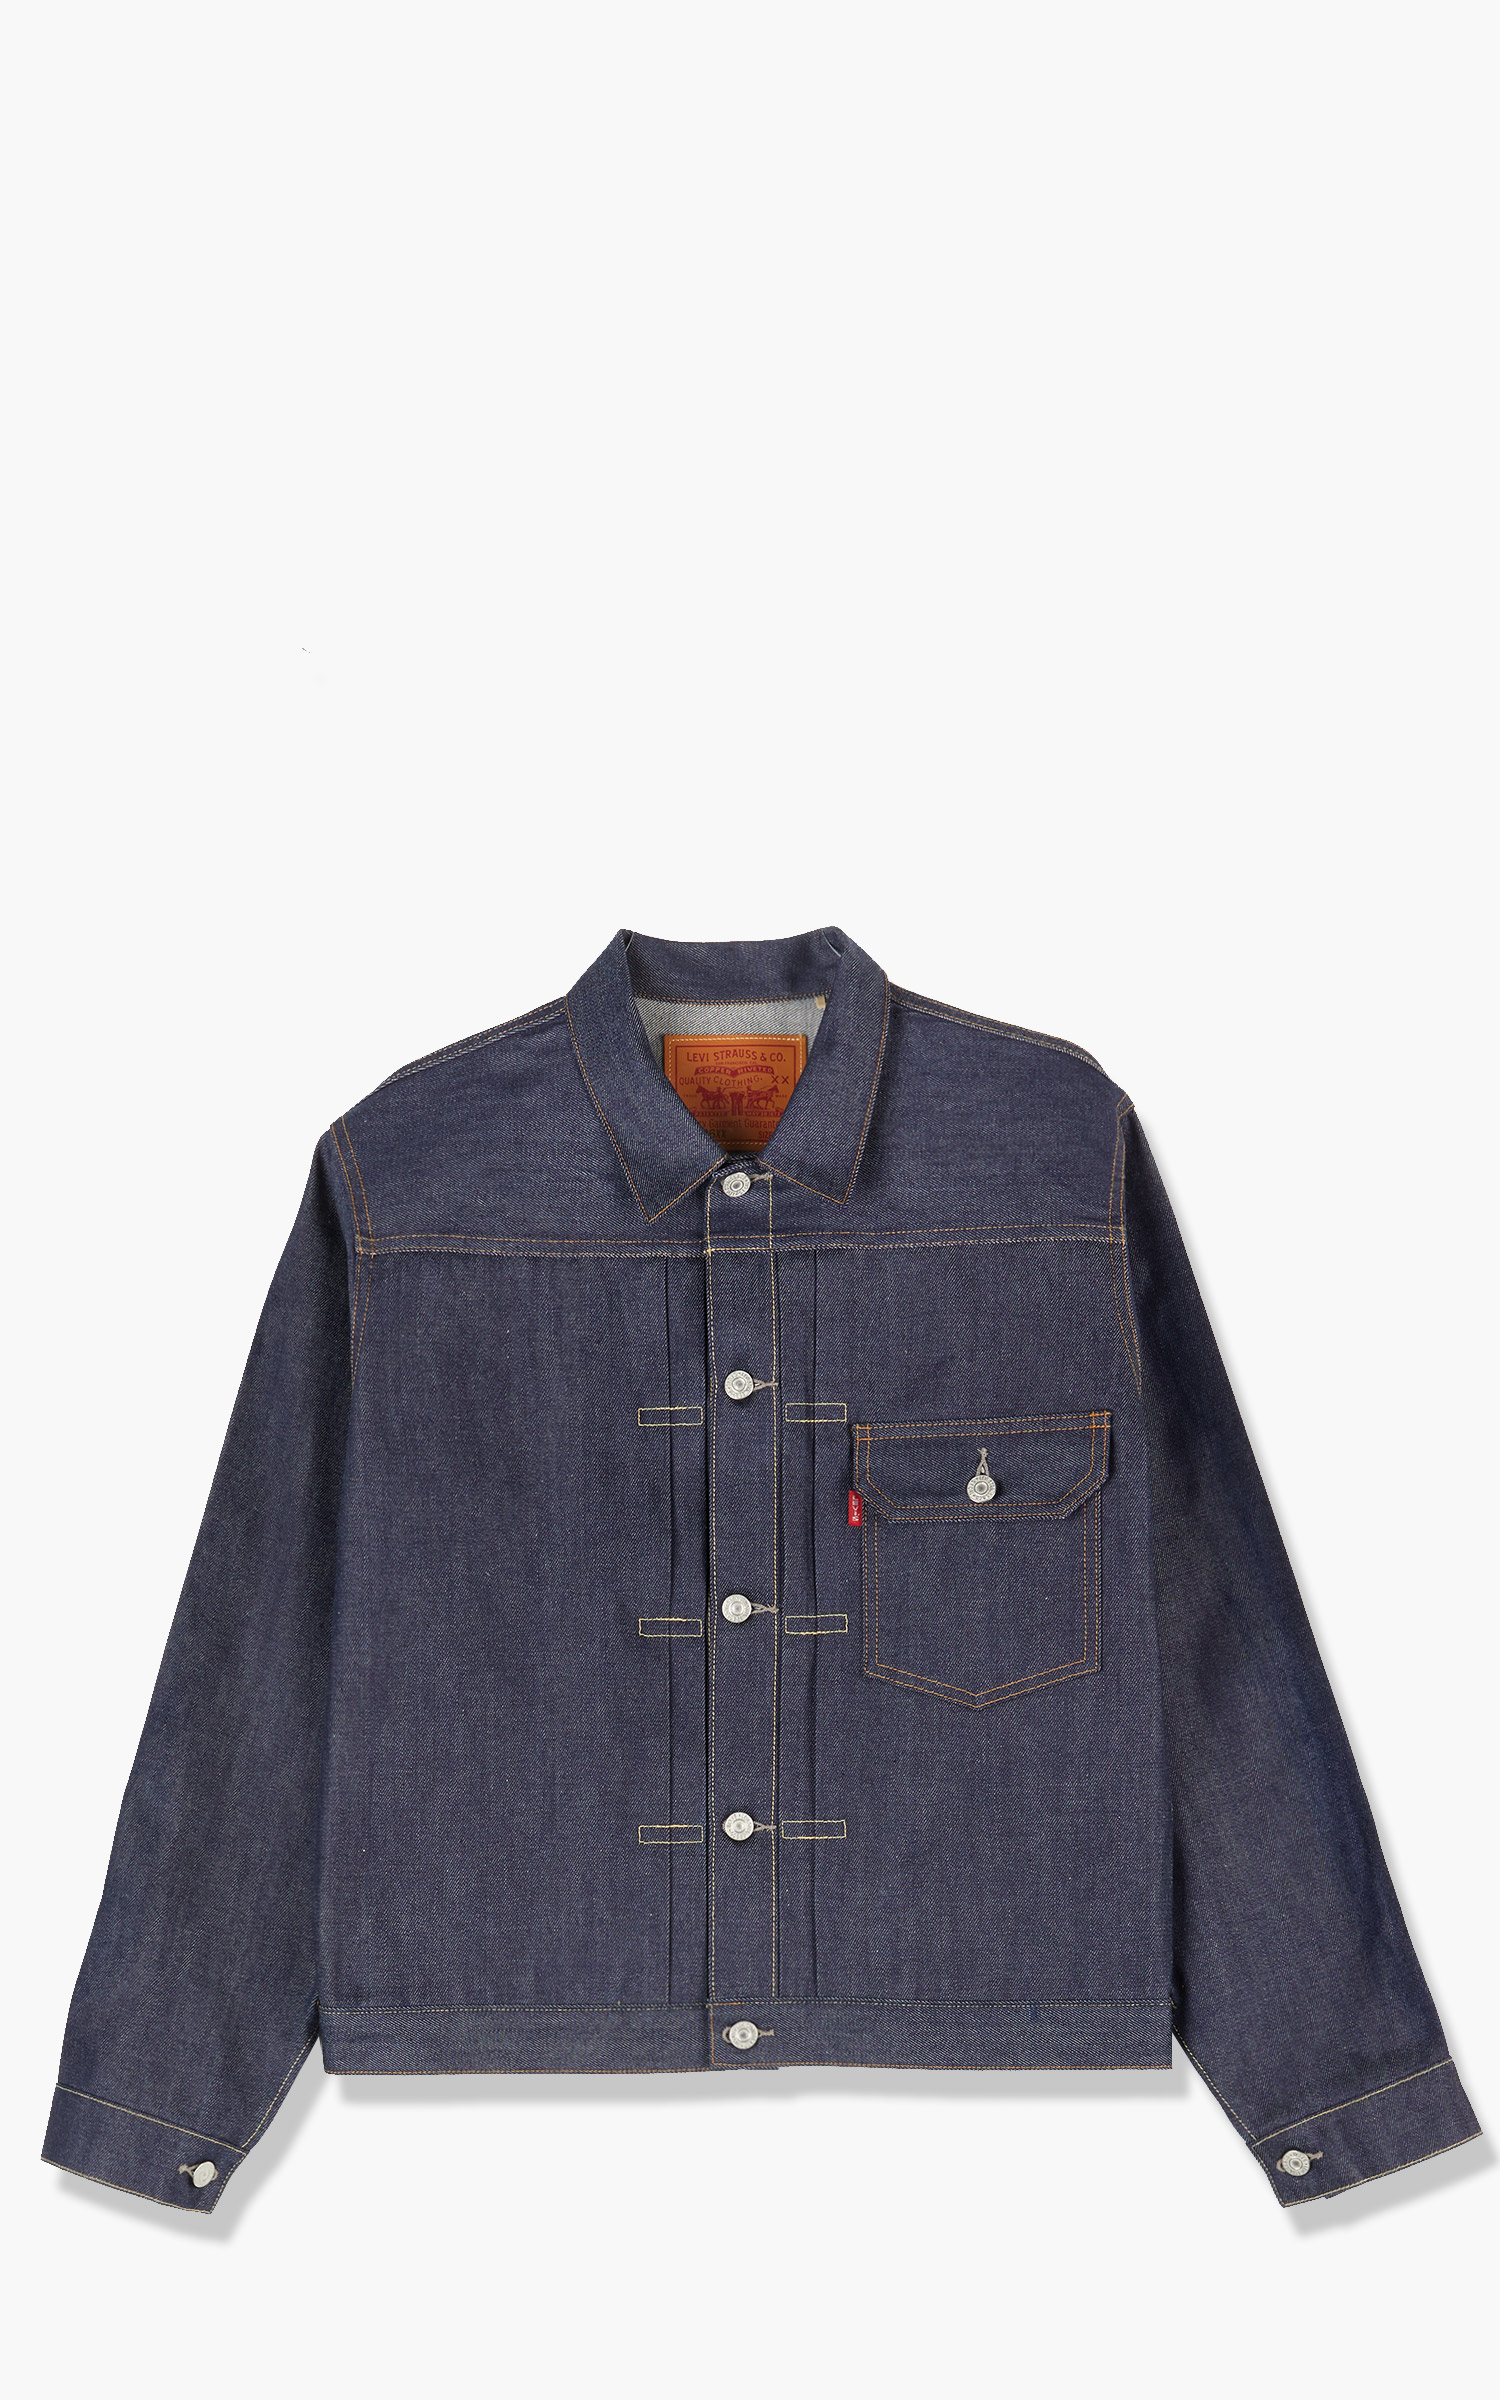 Lvc 1936 type i jacket by Levi's